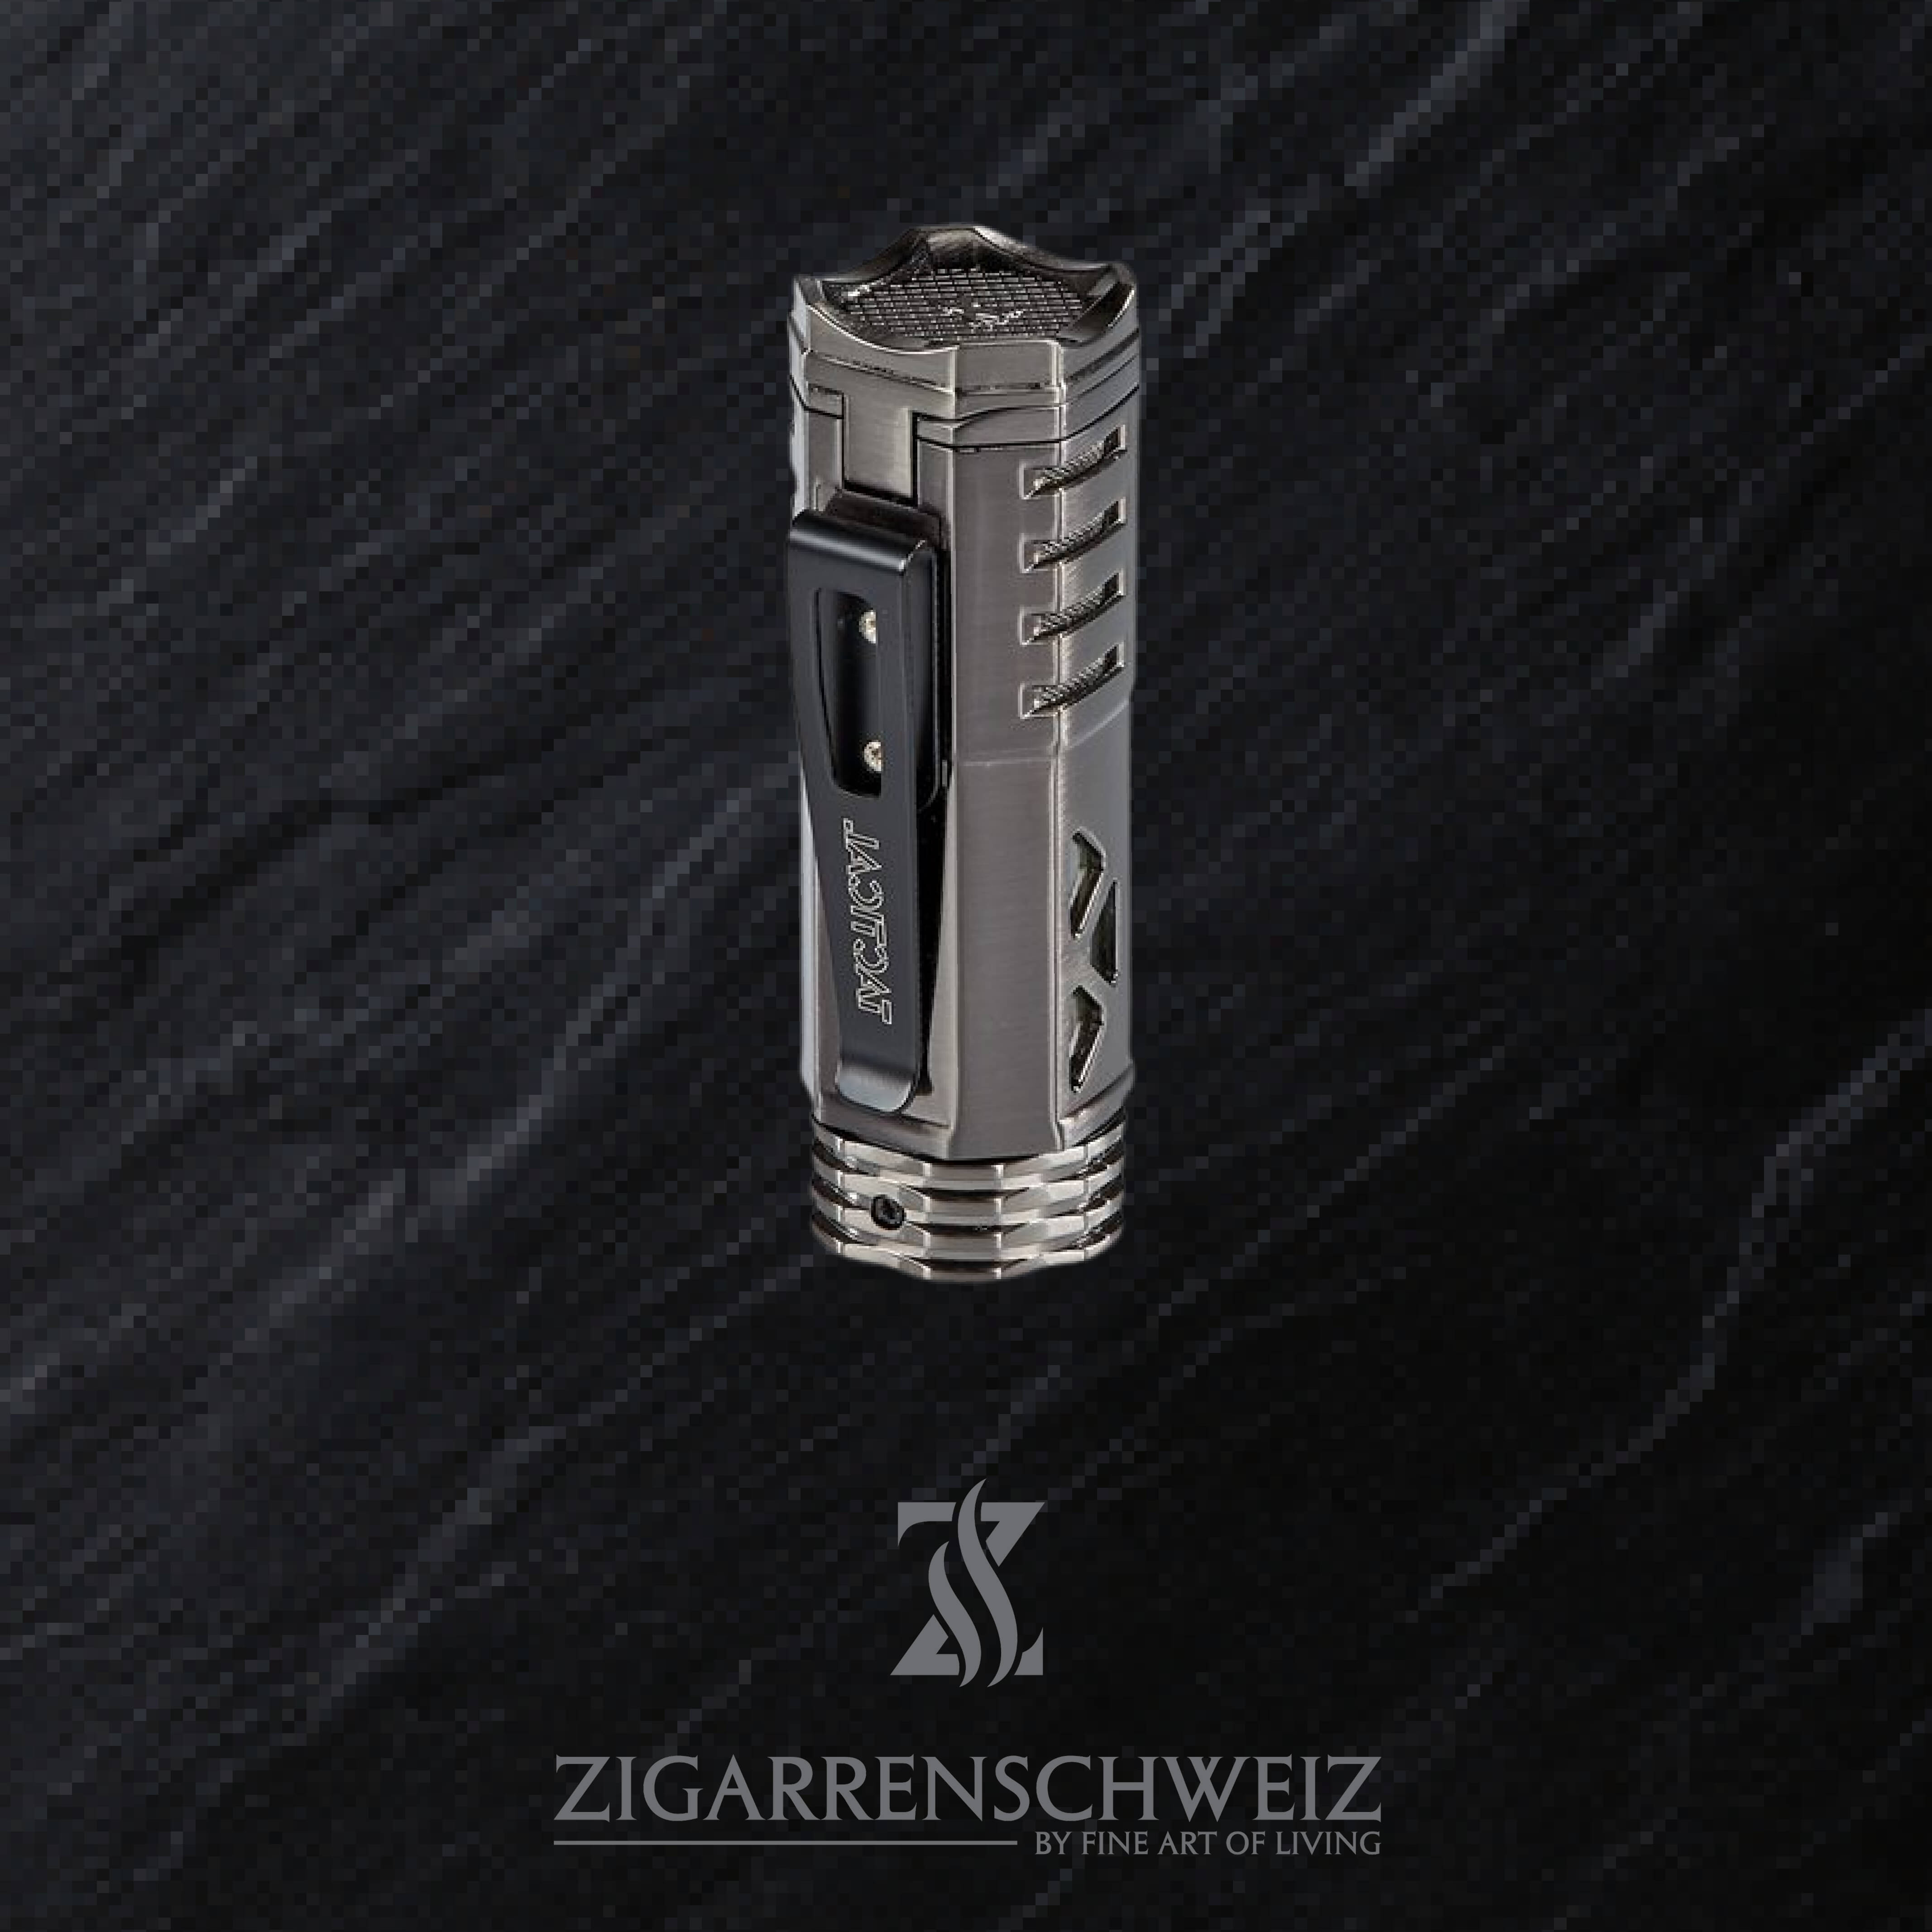 Xikar Tactical 1 Single Jet Flame Feuerzeug für Zigarren, Deckel geschlossen / Farbe: Gun Metal